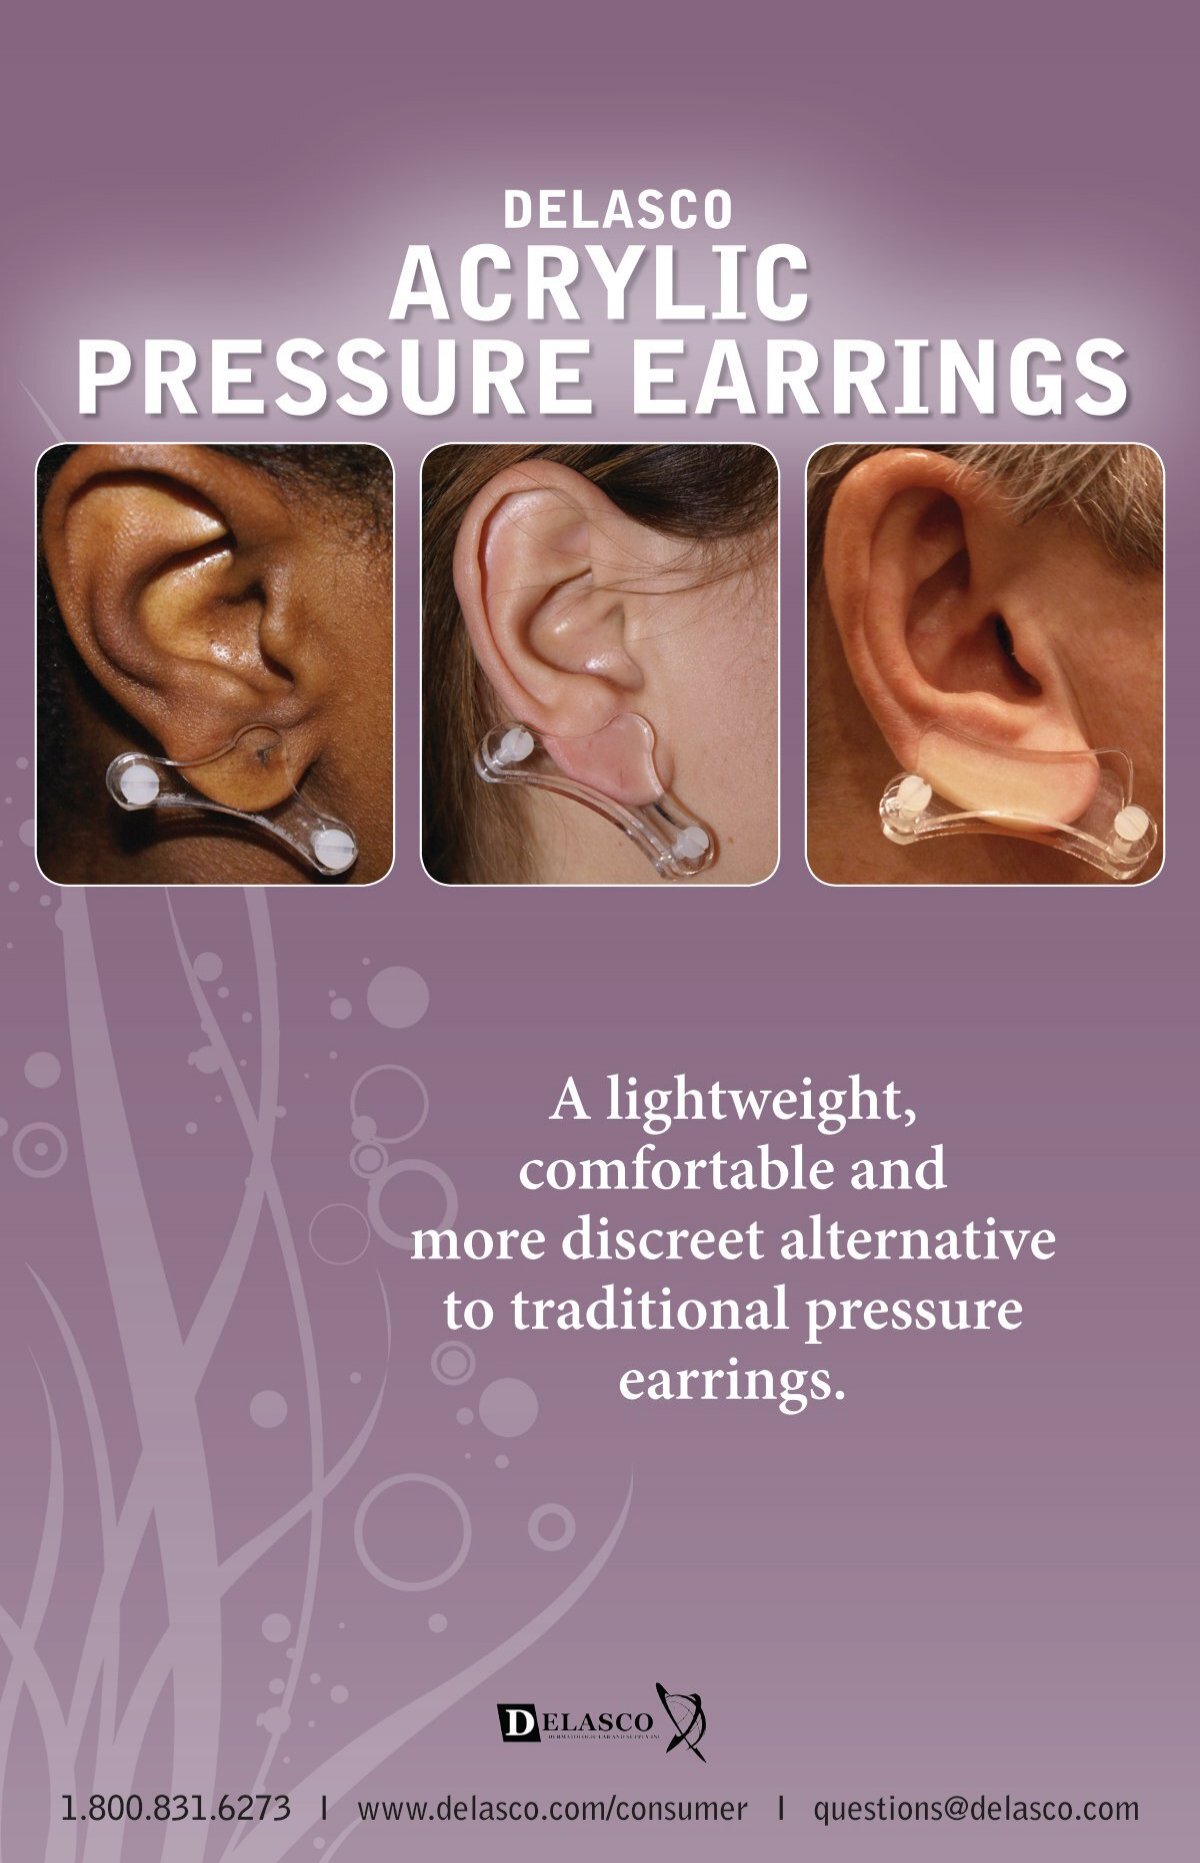 ACRYLIC PRESSURE EARRINGS - Delasco